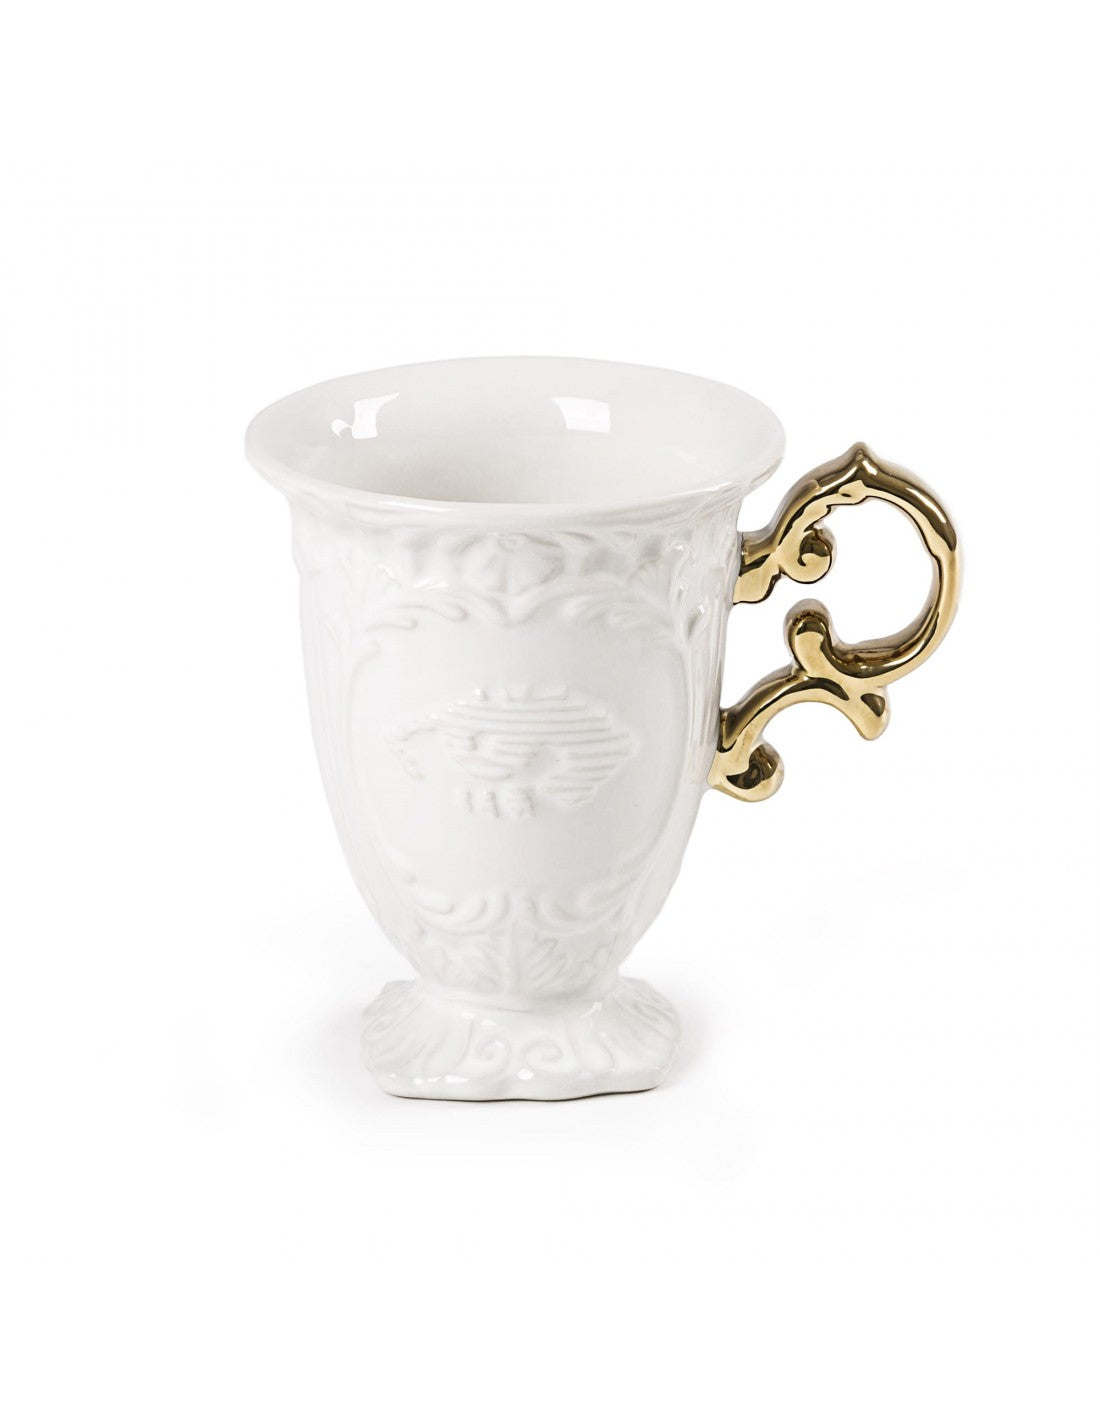 SELETTI i-wares porcelain mug - handle gold- set of 4